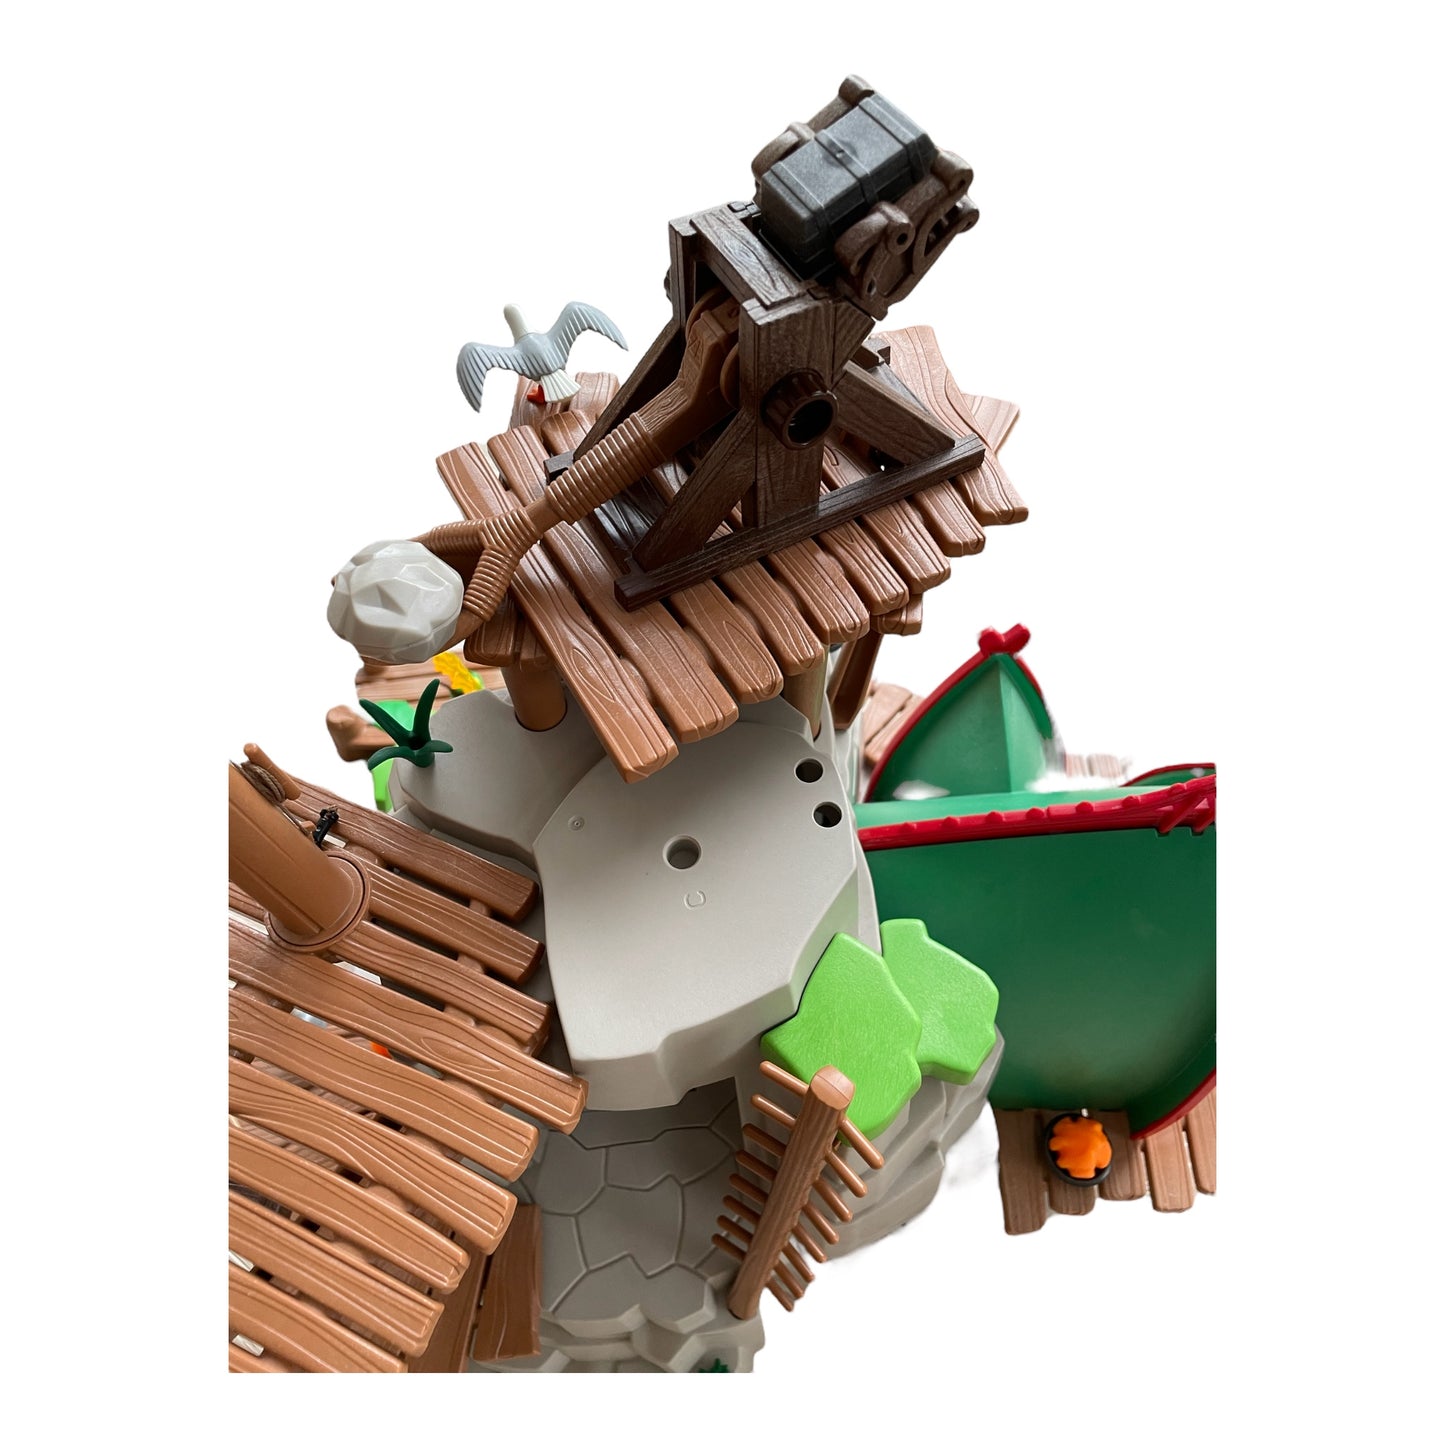 Playmobil ® - Dreamworks Dragons Berk - 9243